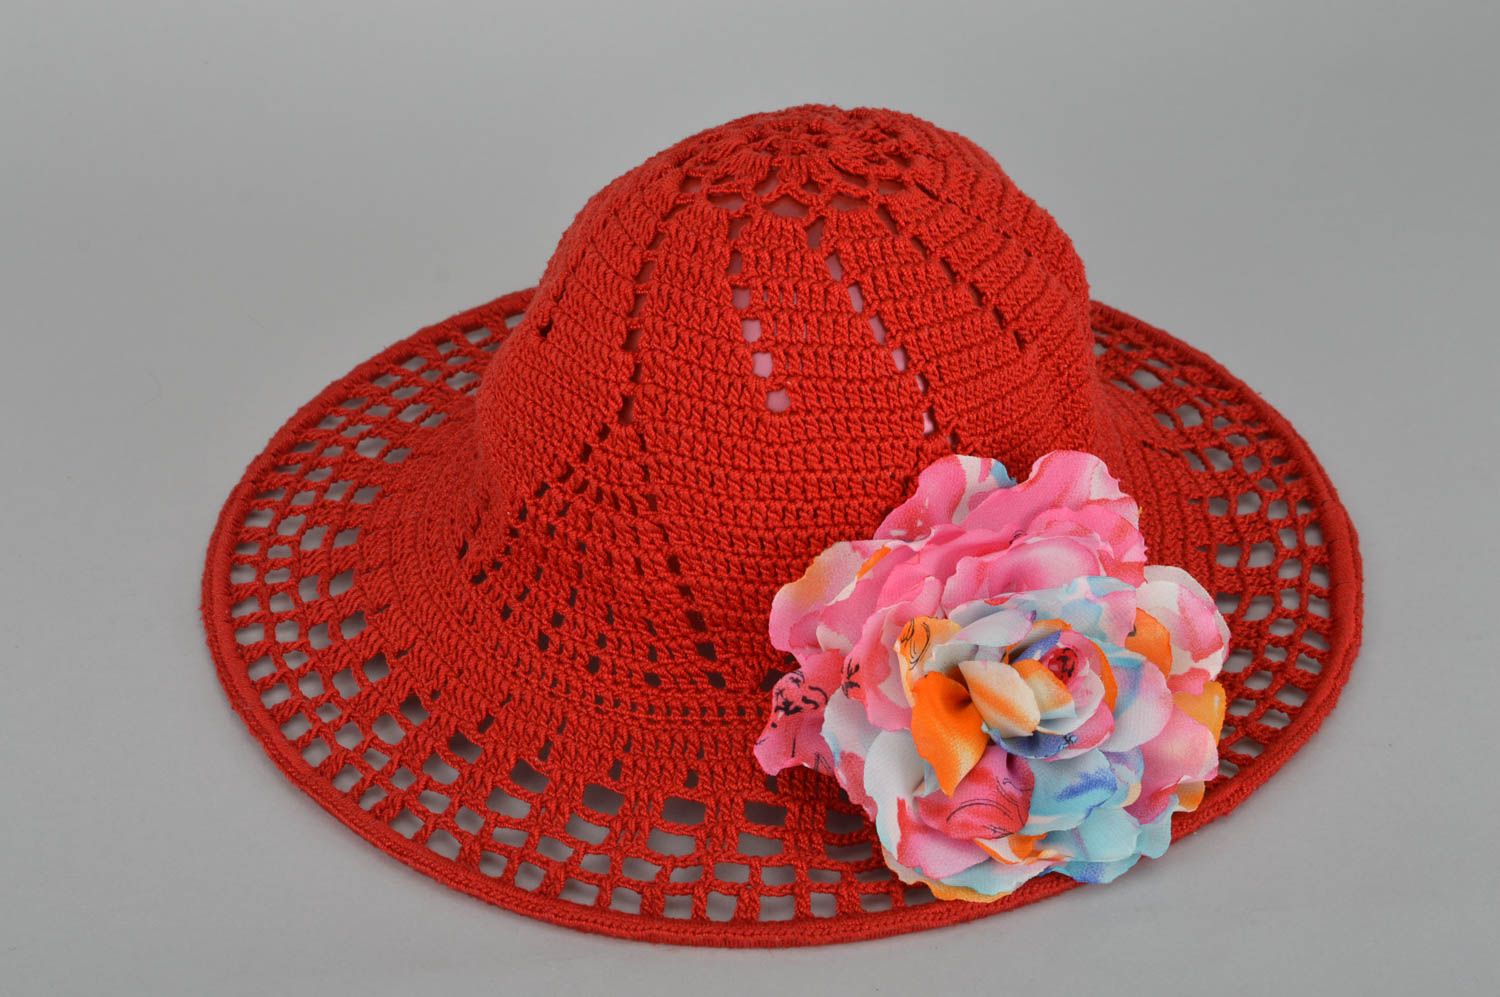 Stylish handmade crochet hat fashion accessories for girls crochet ideas photo 1